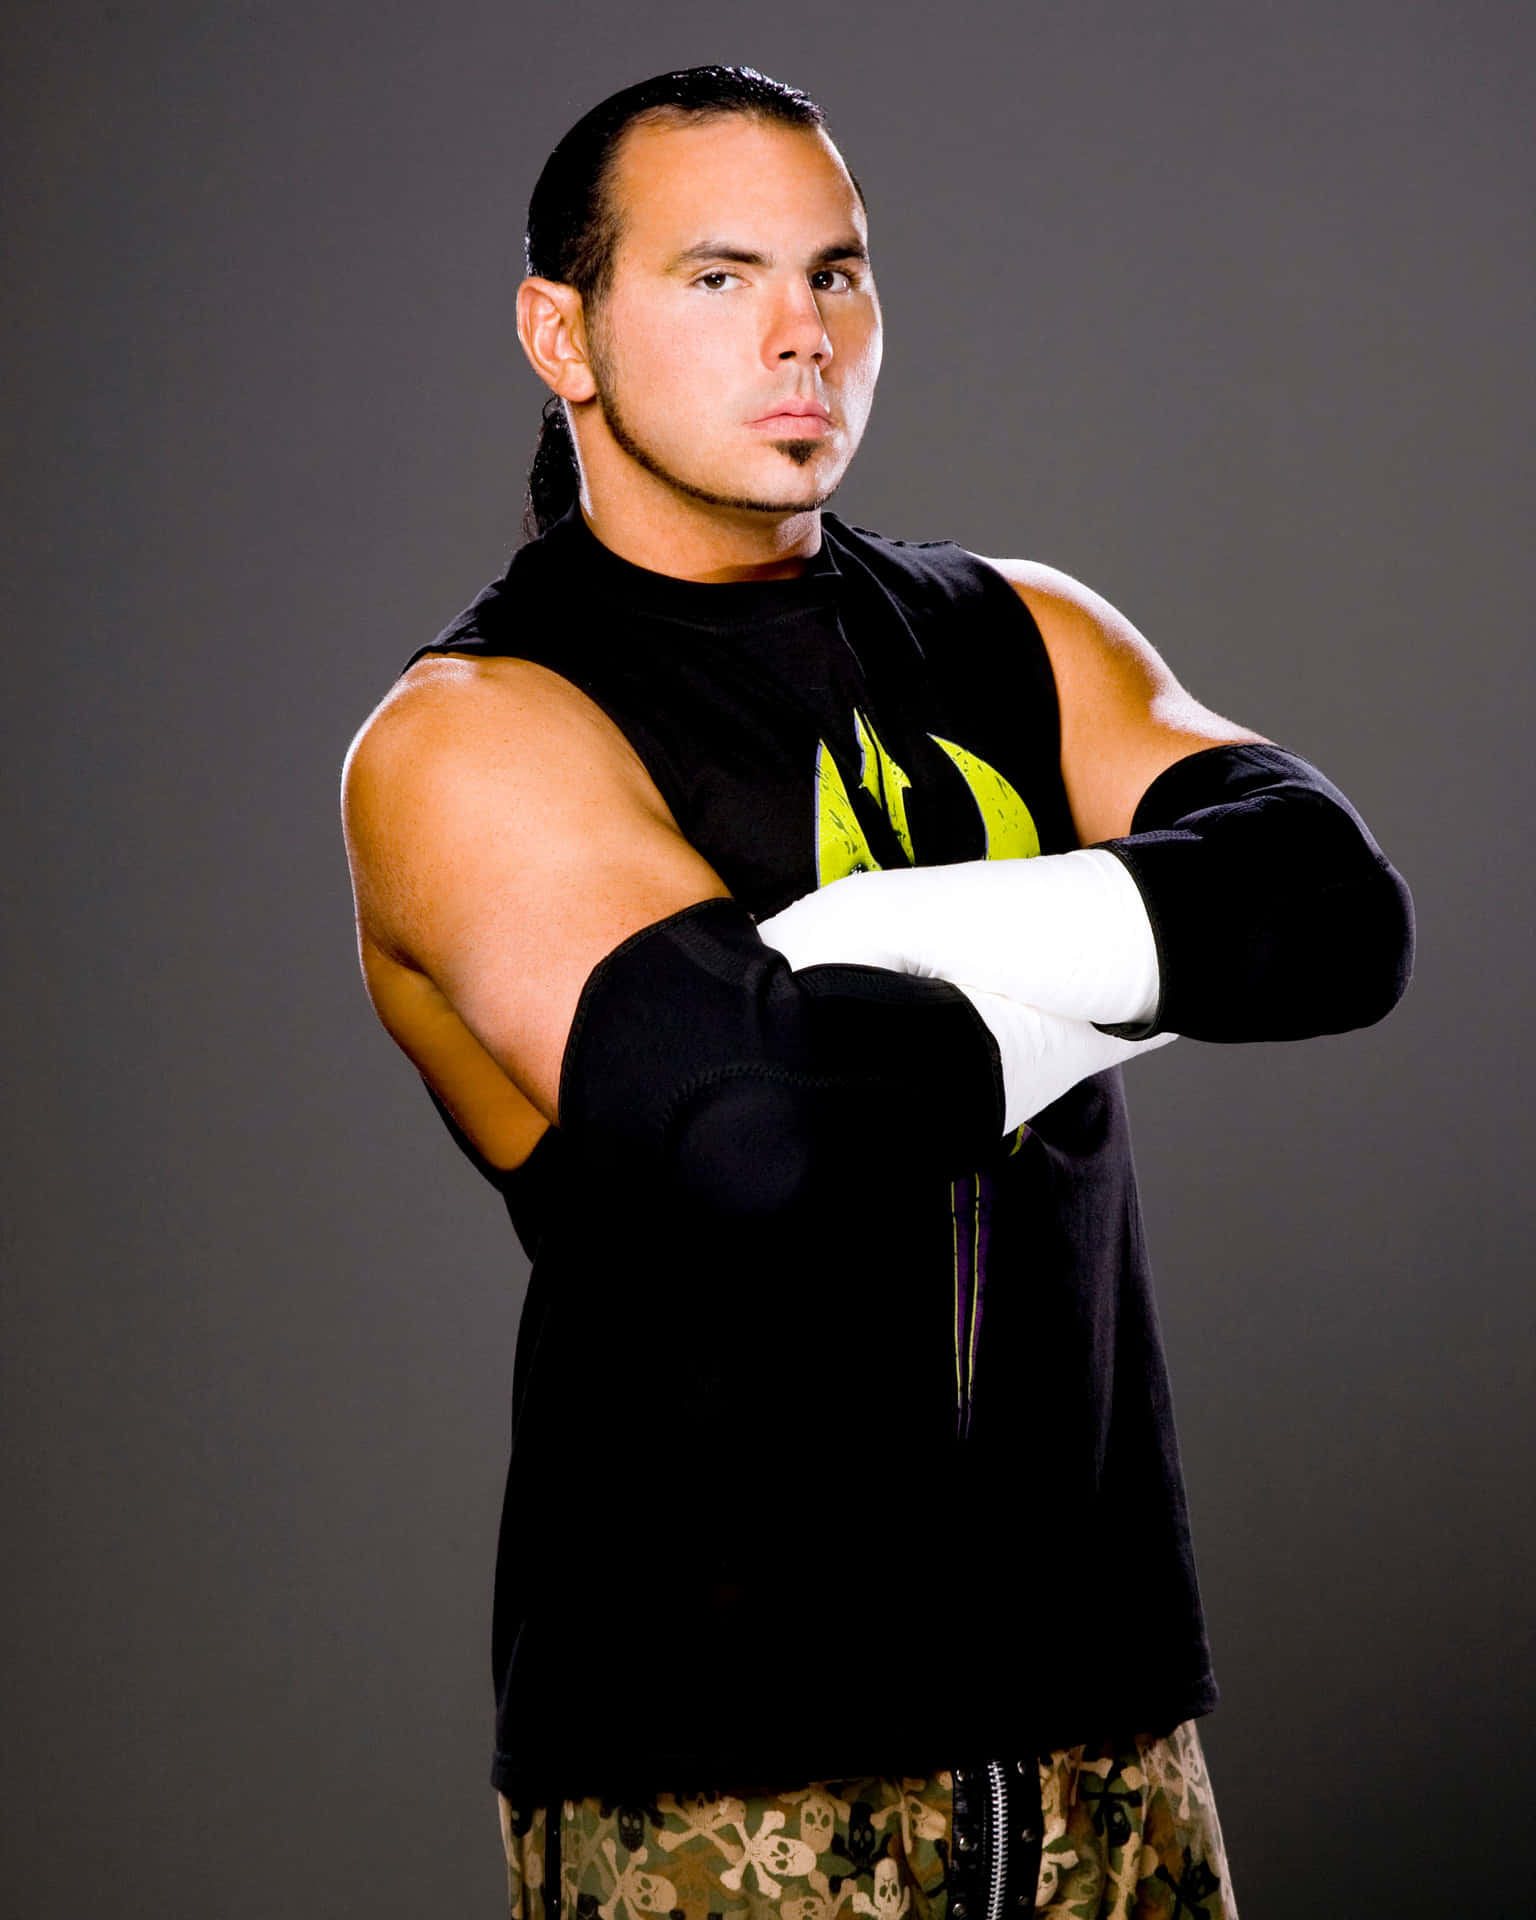 American Professional Wrestler Matt Hardy Photograph Background